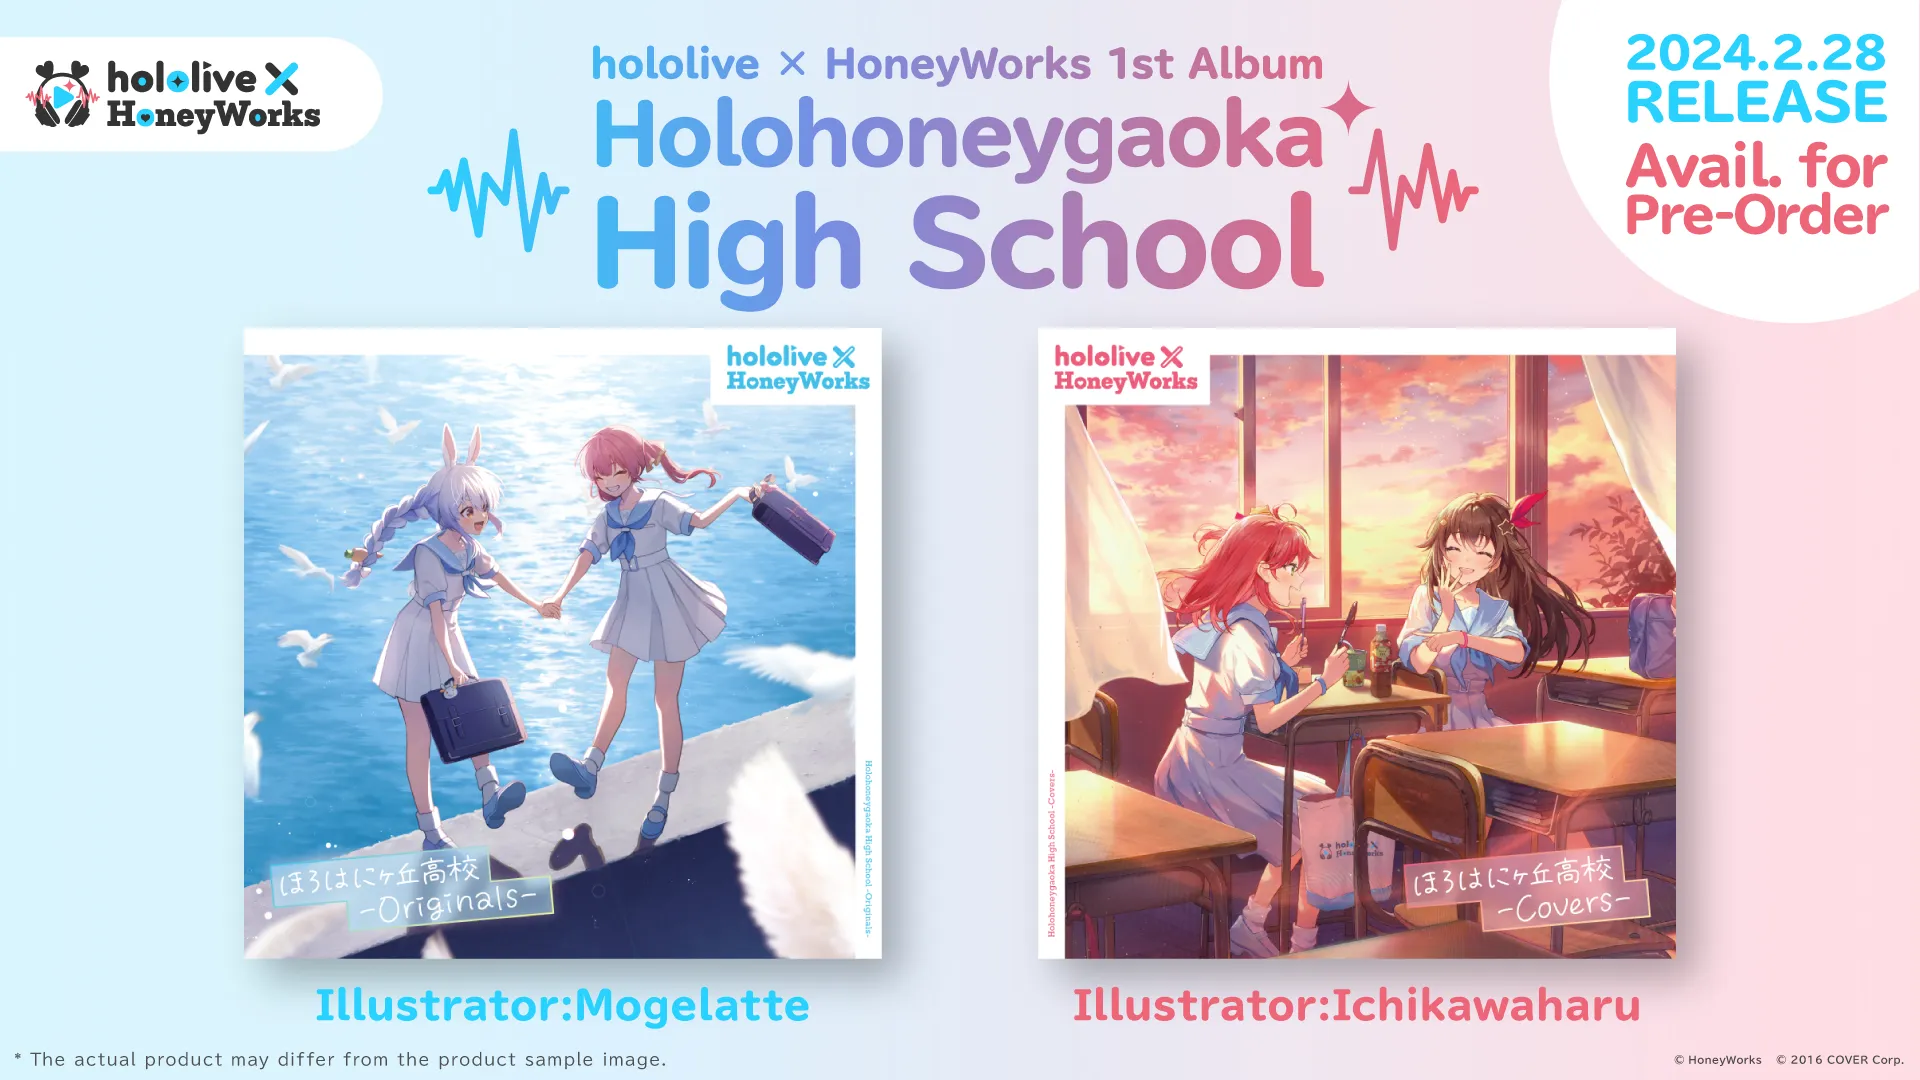 hololive × HoneyWorks (holoHoney) First Album “Holohoneygaoka High School“ Pre-Orders Start